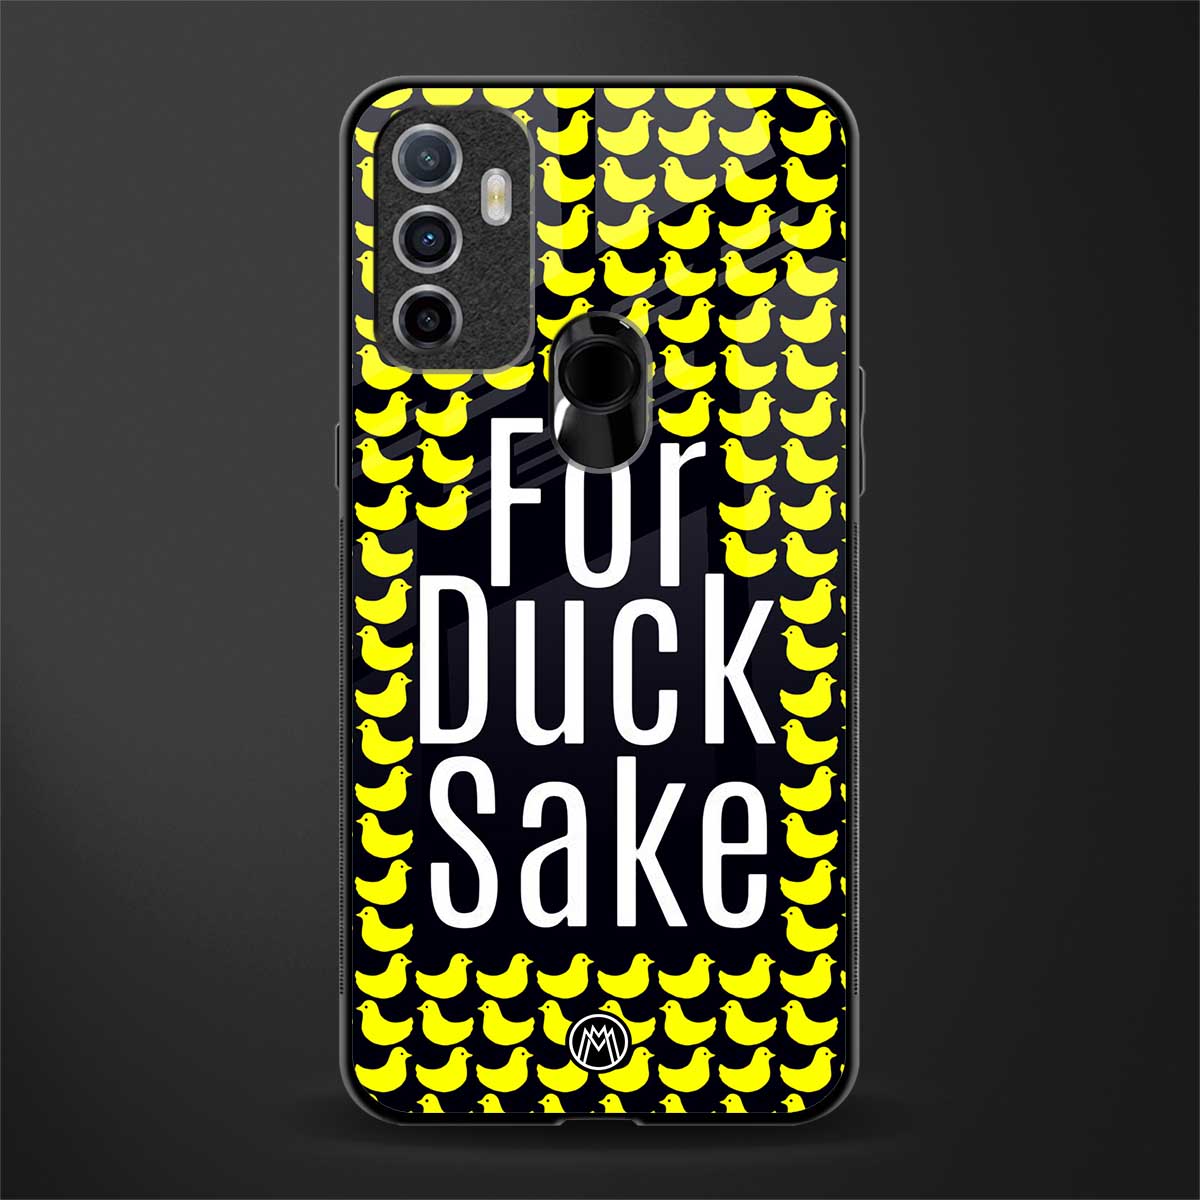 for duck sake glass case for oppo a53 image